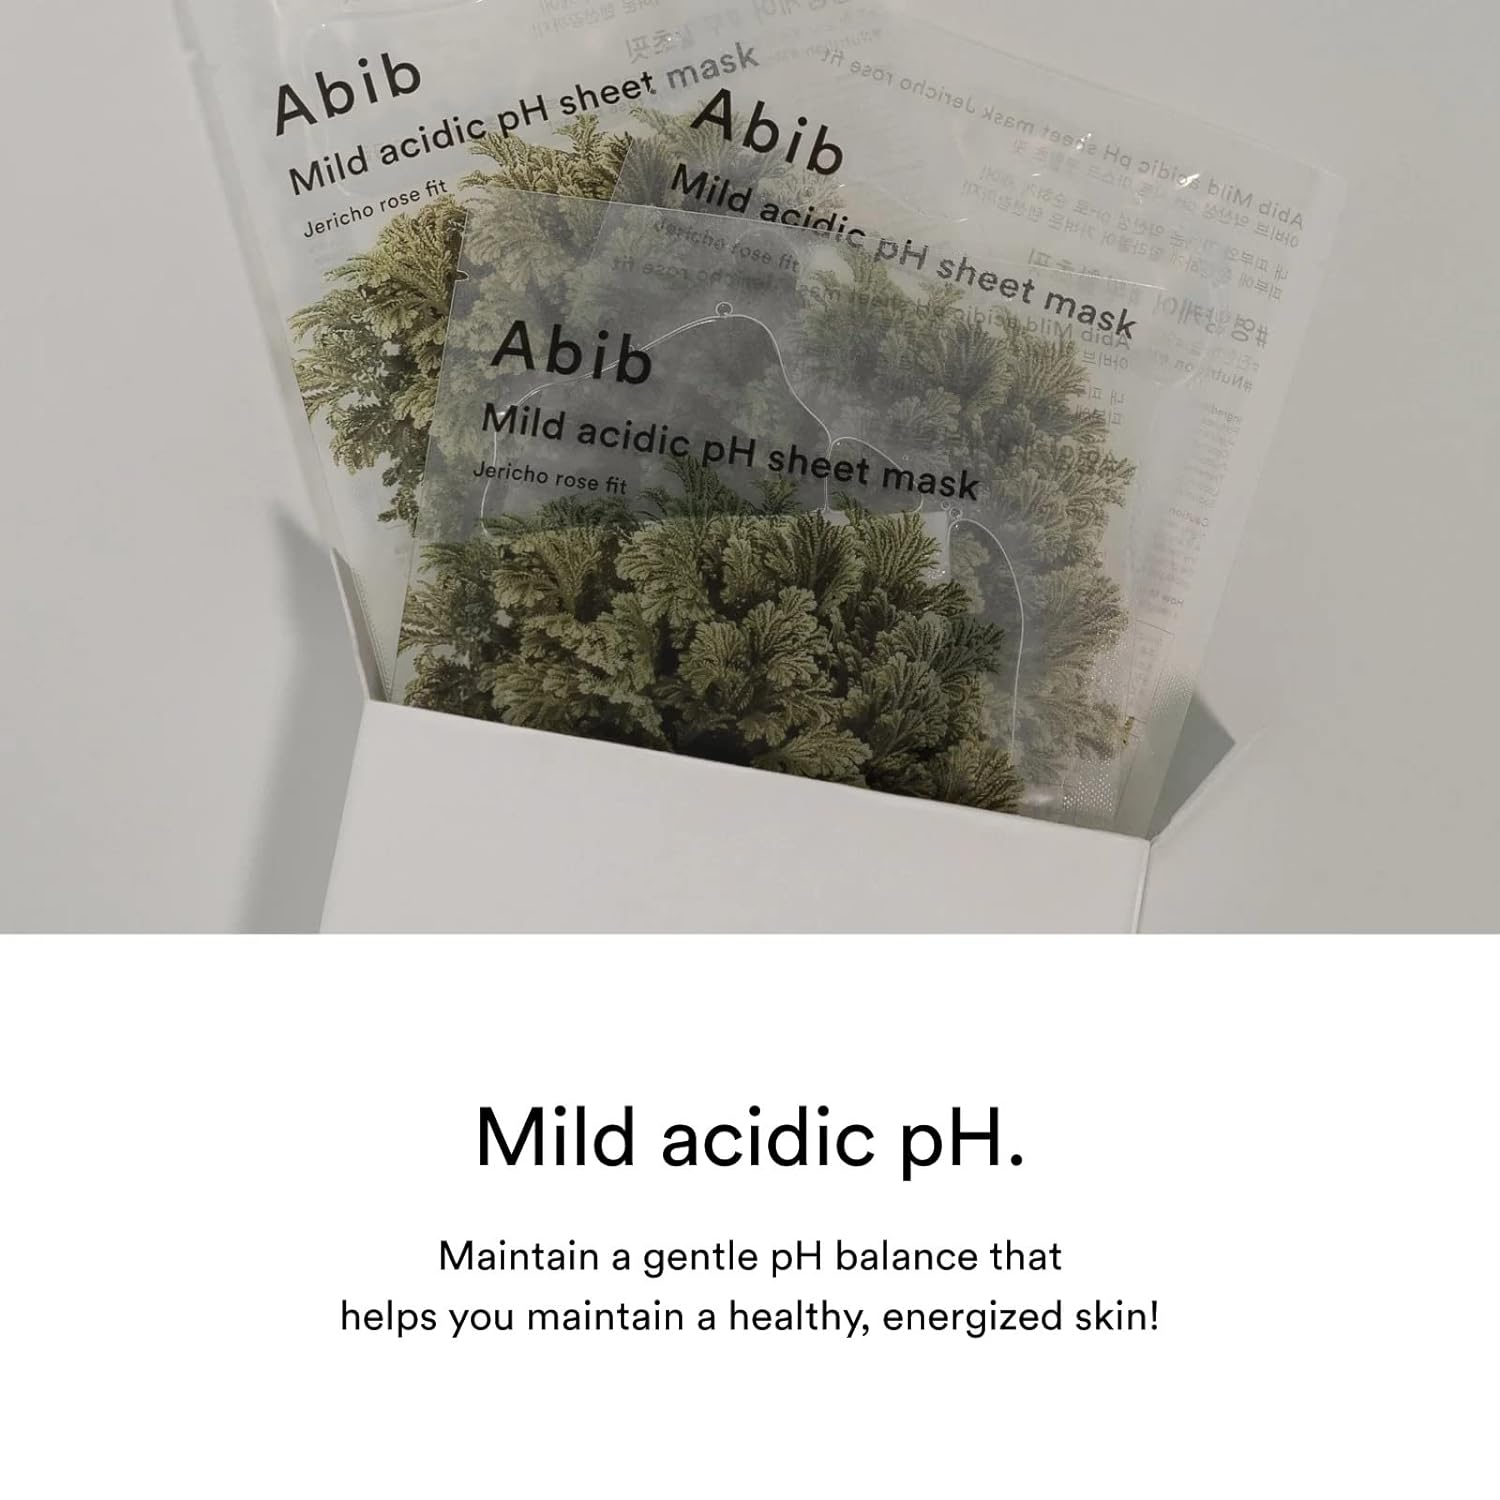 Abib Mild Acidic Ph Sheet Mask Jericho Rose Fit 10 Sheets : Beauty & Personal Care